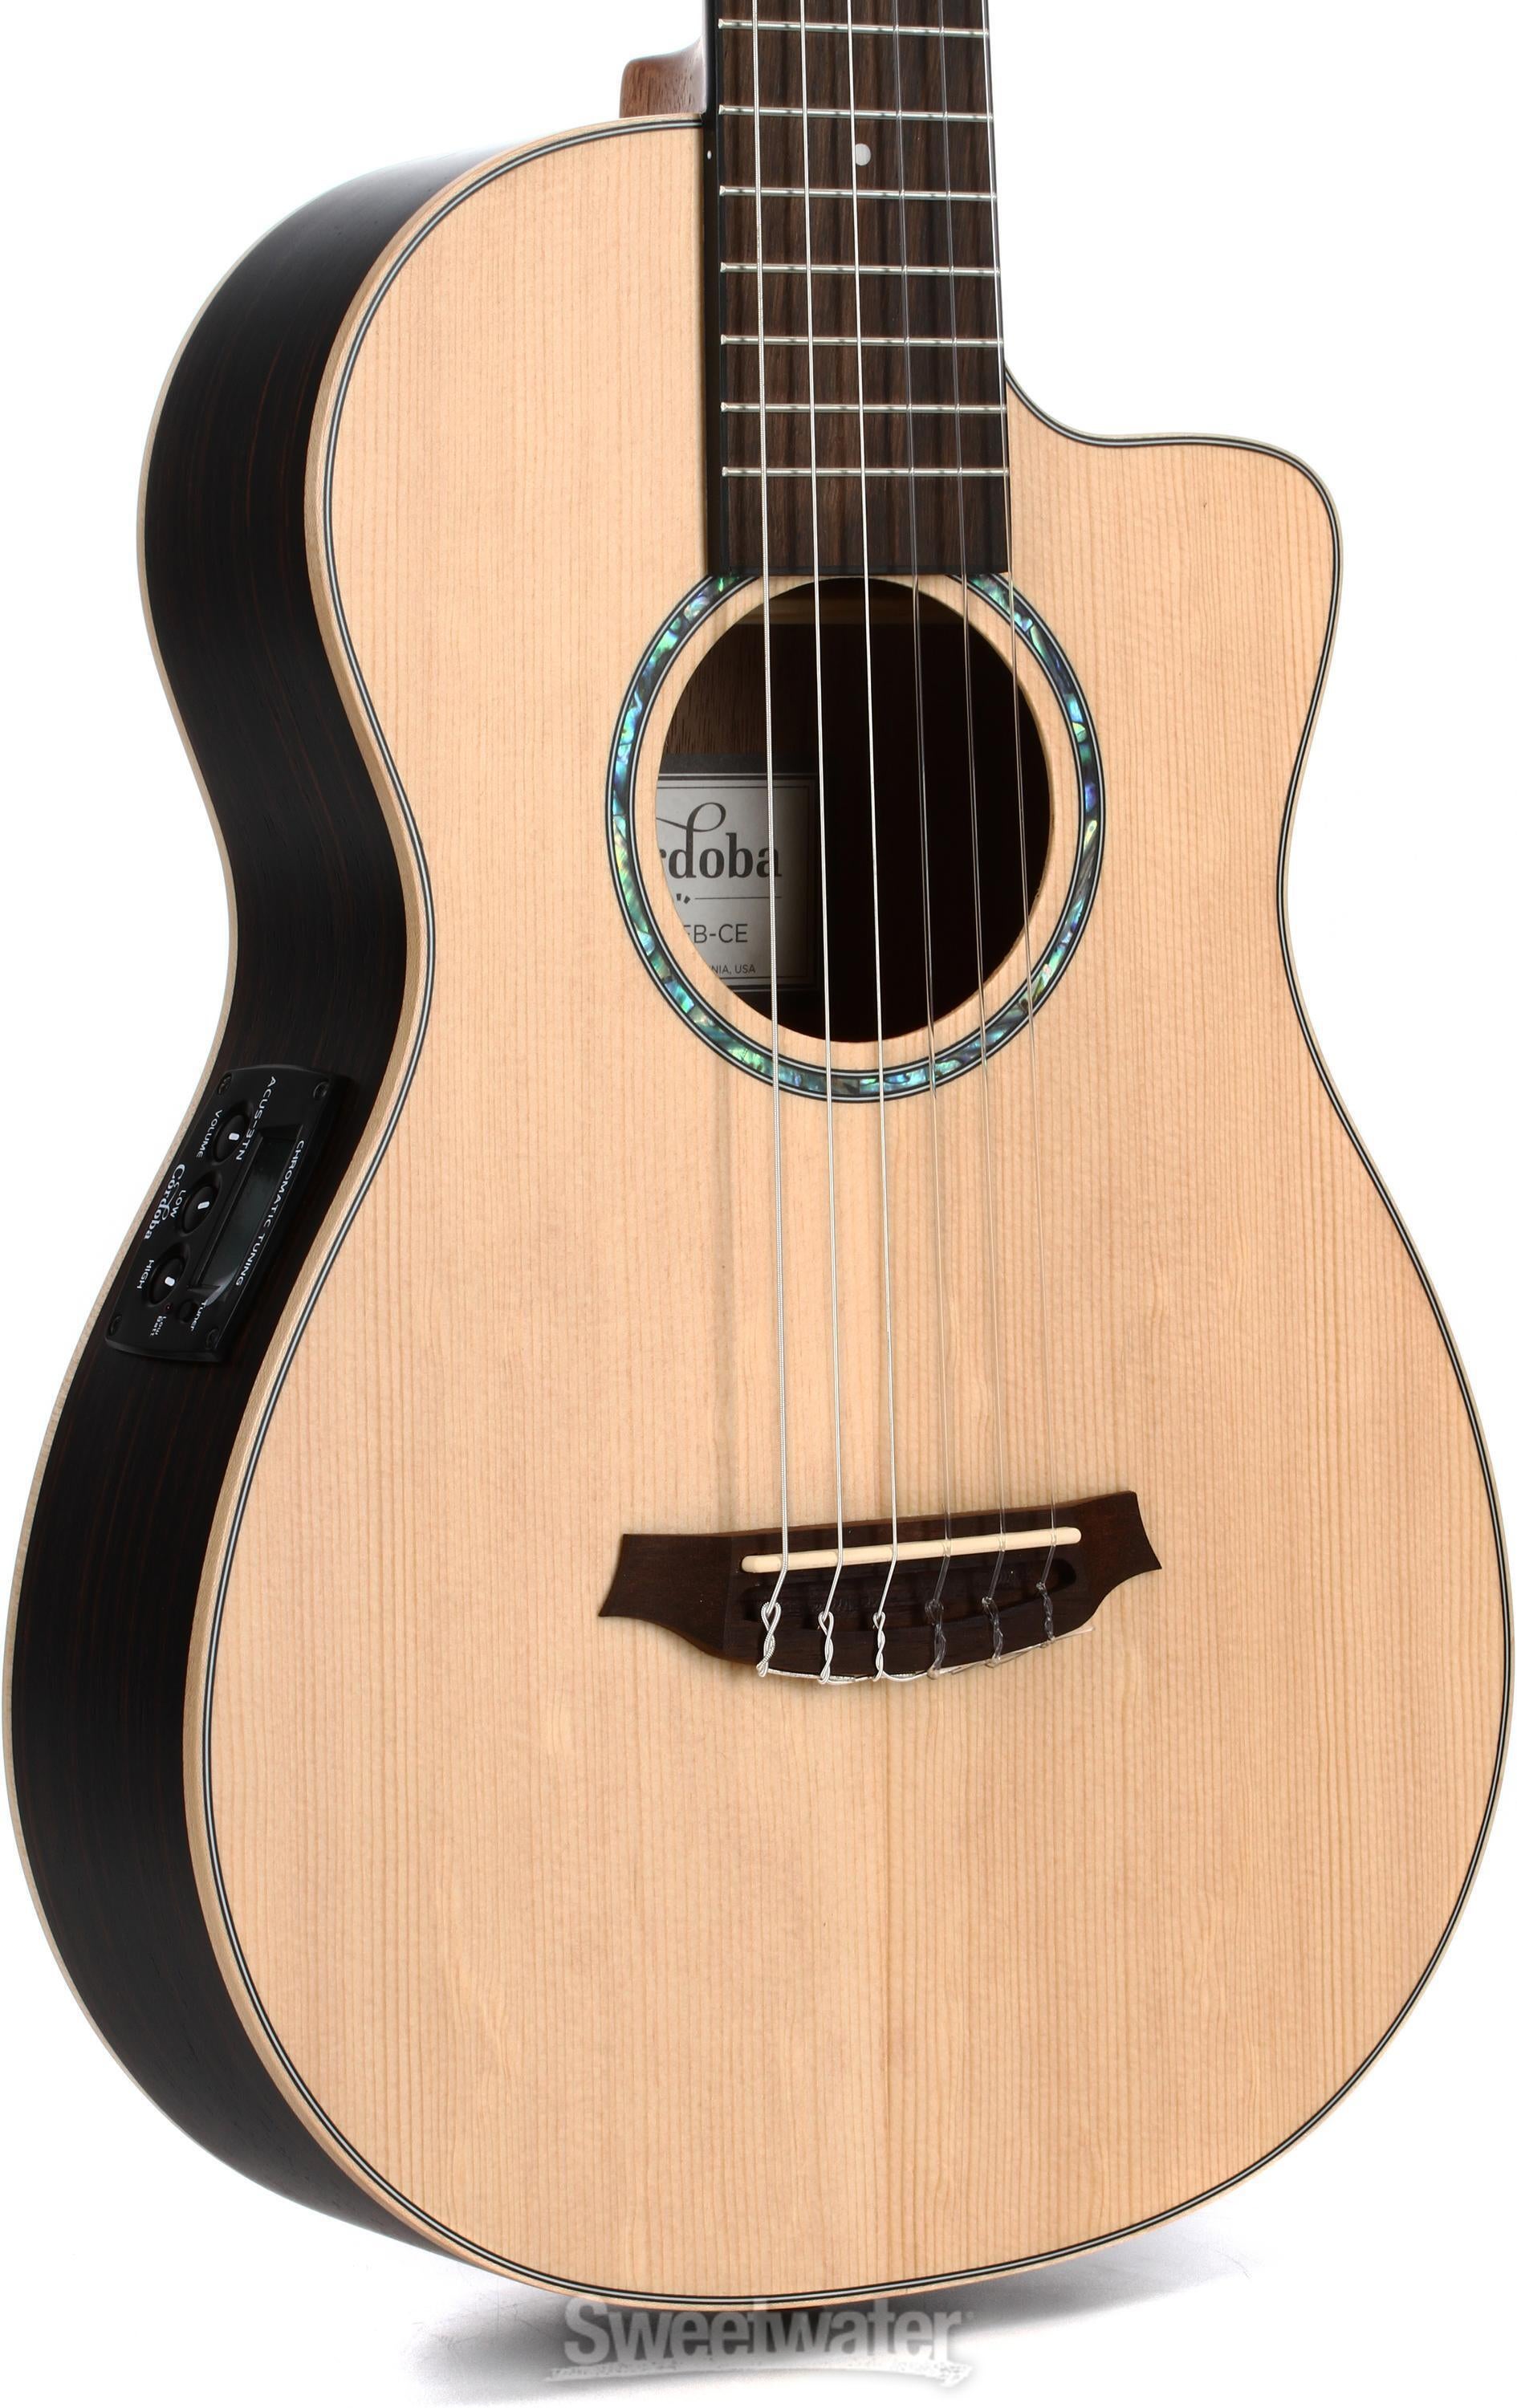 Cordoba Mini II EB-CE Nylon String Acoustic-electric Guitar 